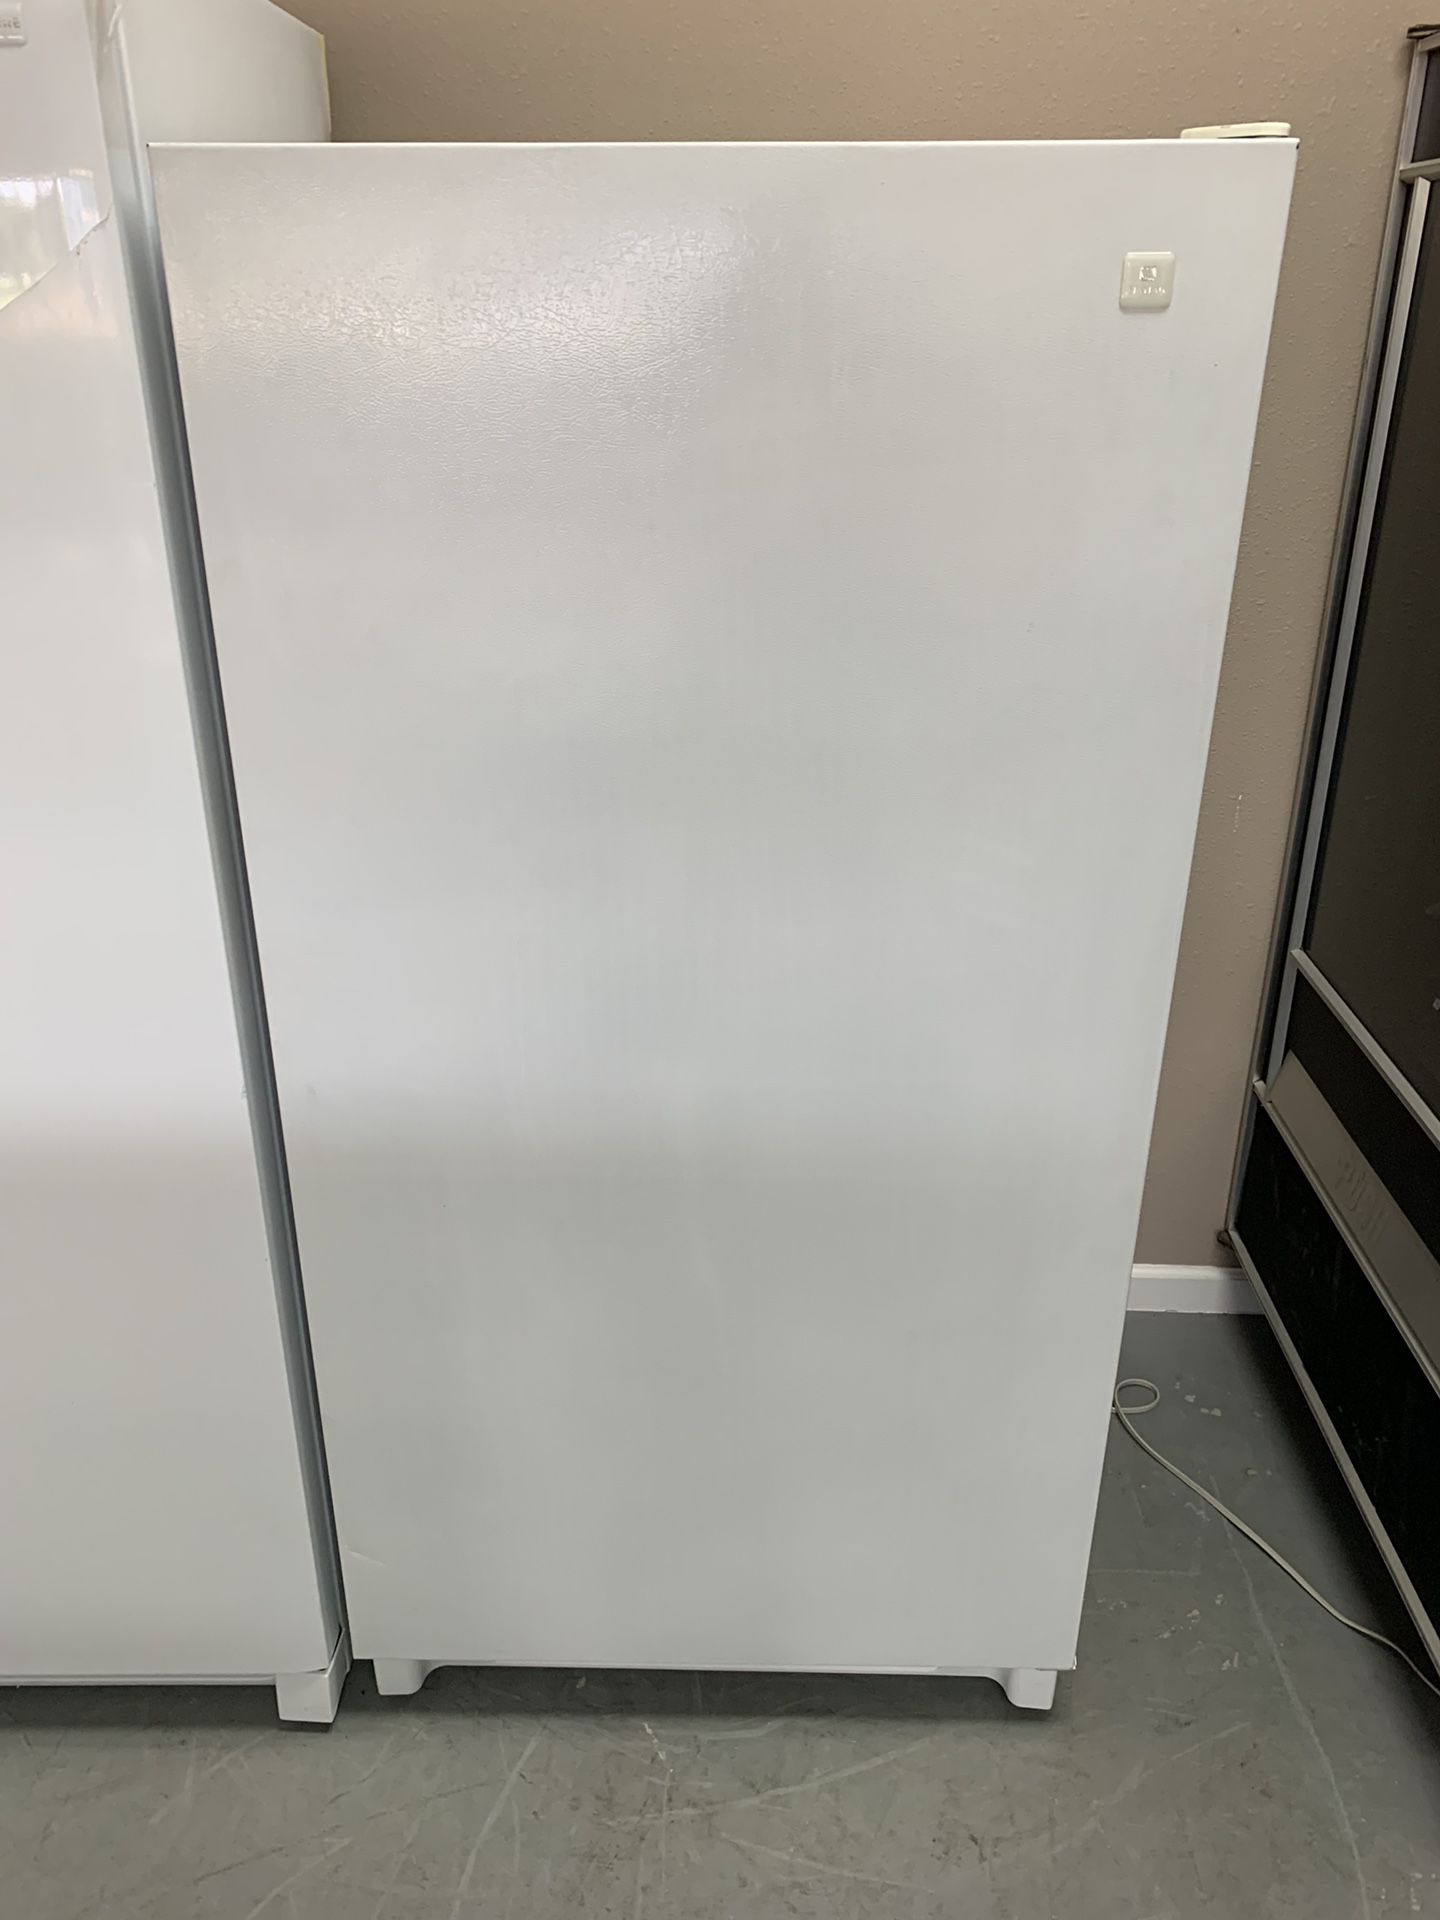 Maytag Upright Freezer